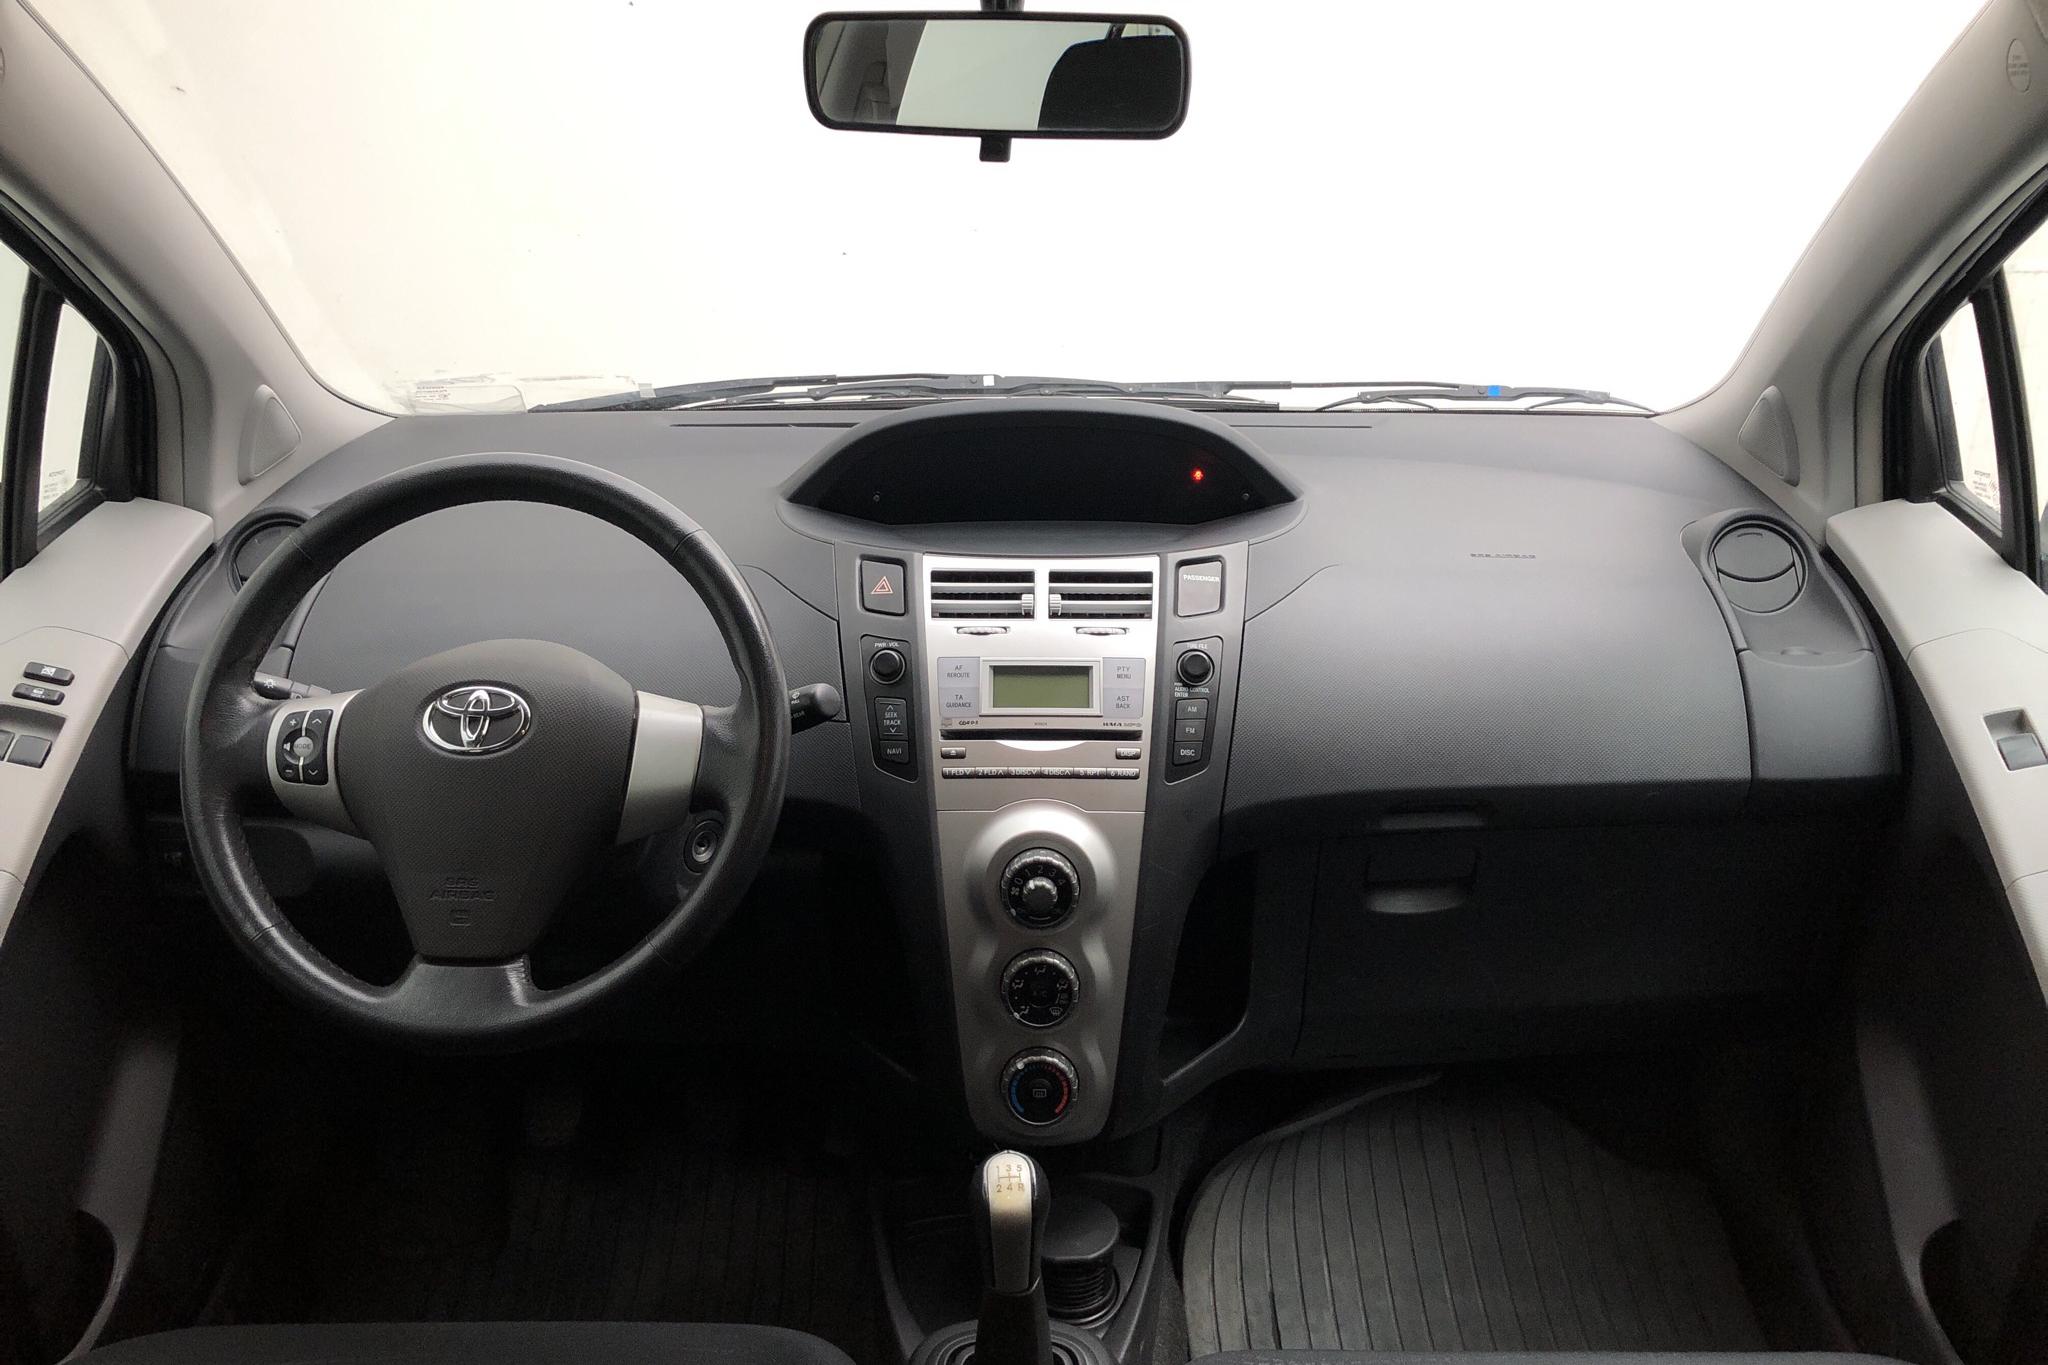 Toyota Yaris 1.3 5dr (87hk) - 130 530 km - Manual - Dark Green - 2006